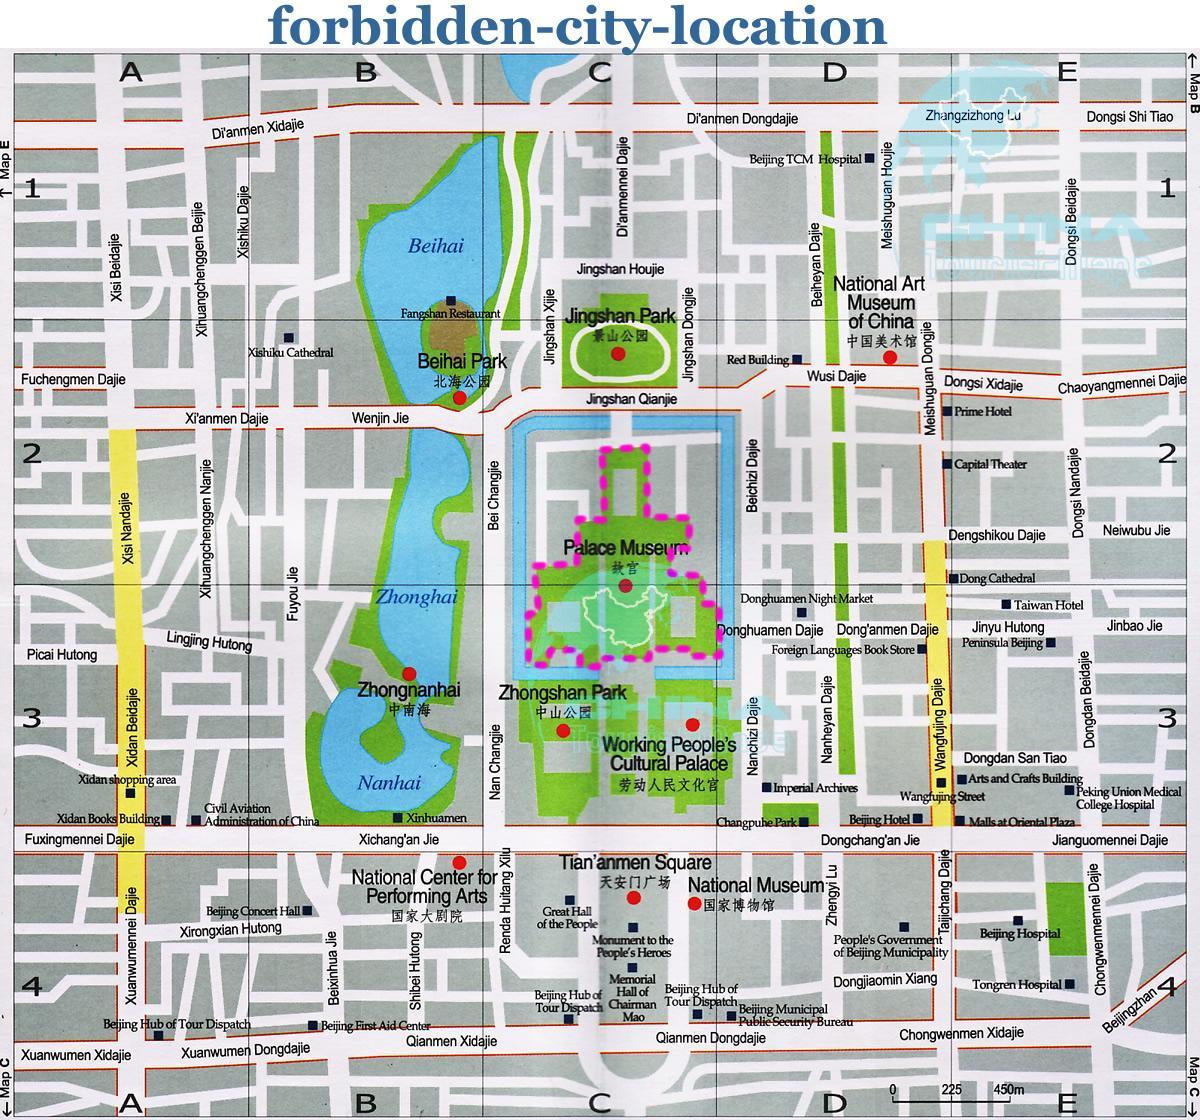 mapa de la ciutat prohibida mapa detallat